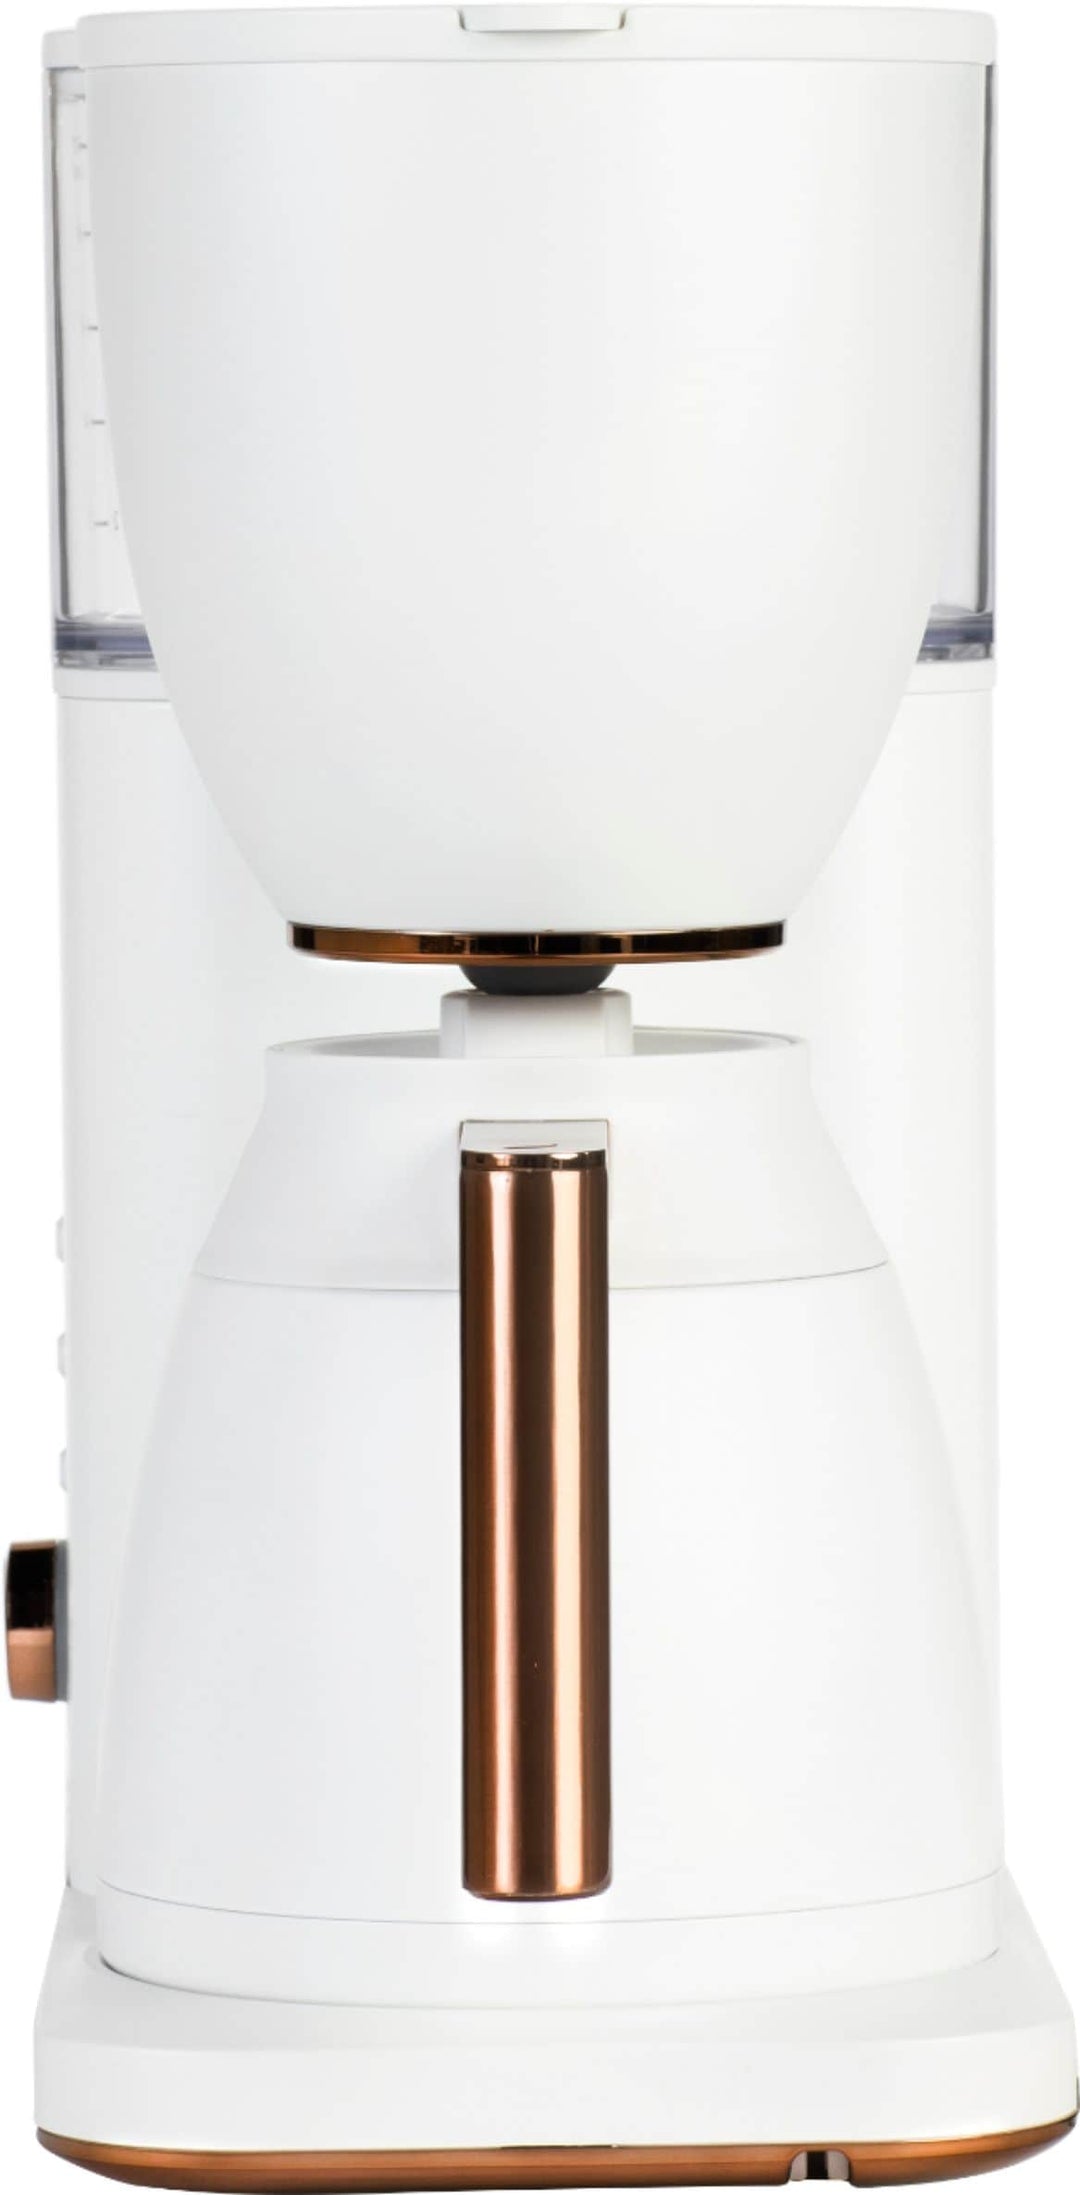 Café - Smart Drip 10-Cup Coffee Maker with Wi-Fi - Matte White_16